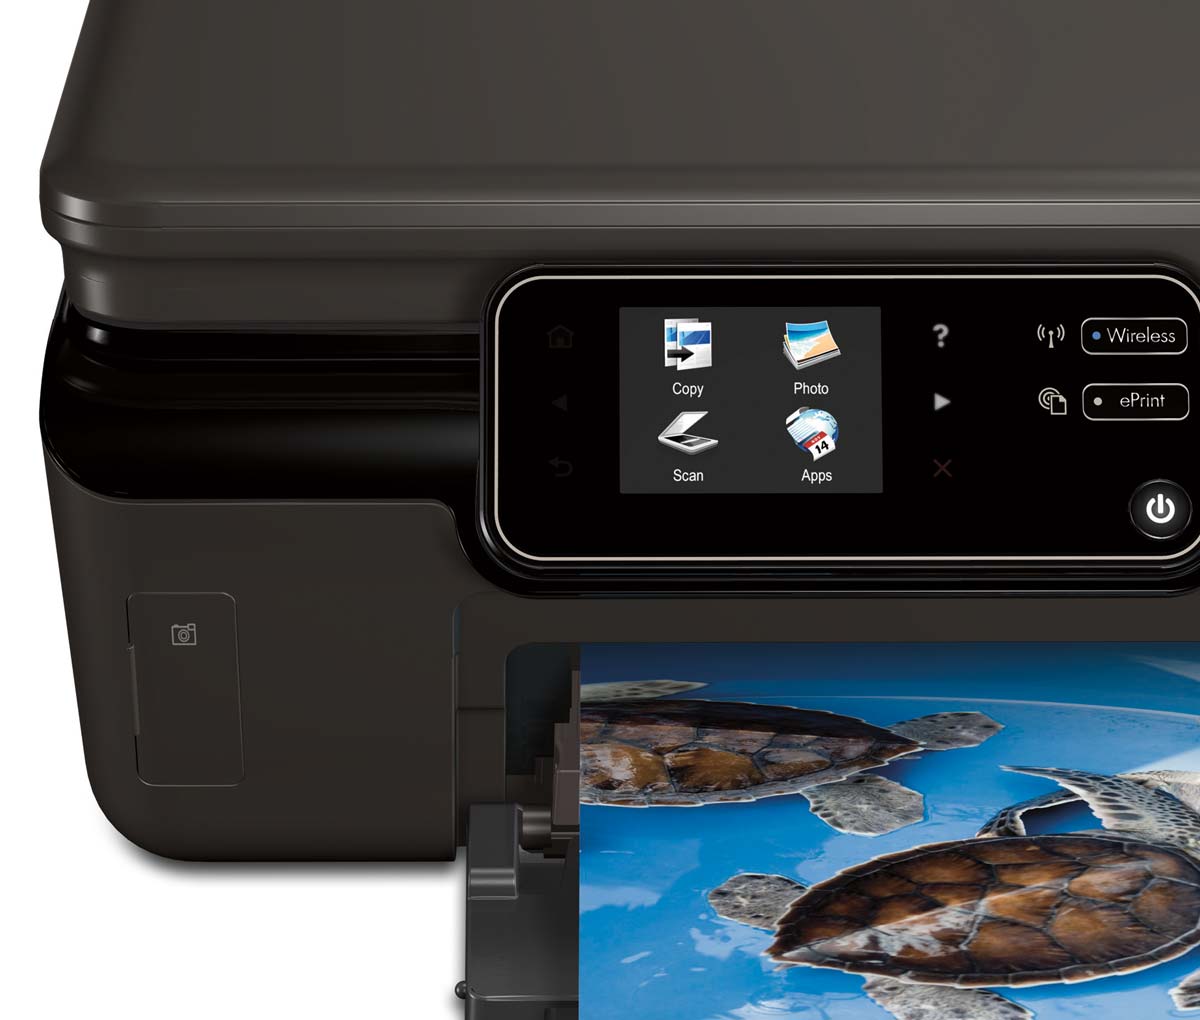 HP Photosmart 5510 e-All-in-One Printer - B111a Drivers